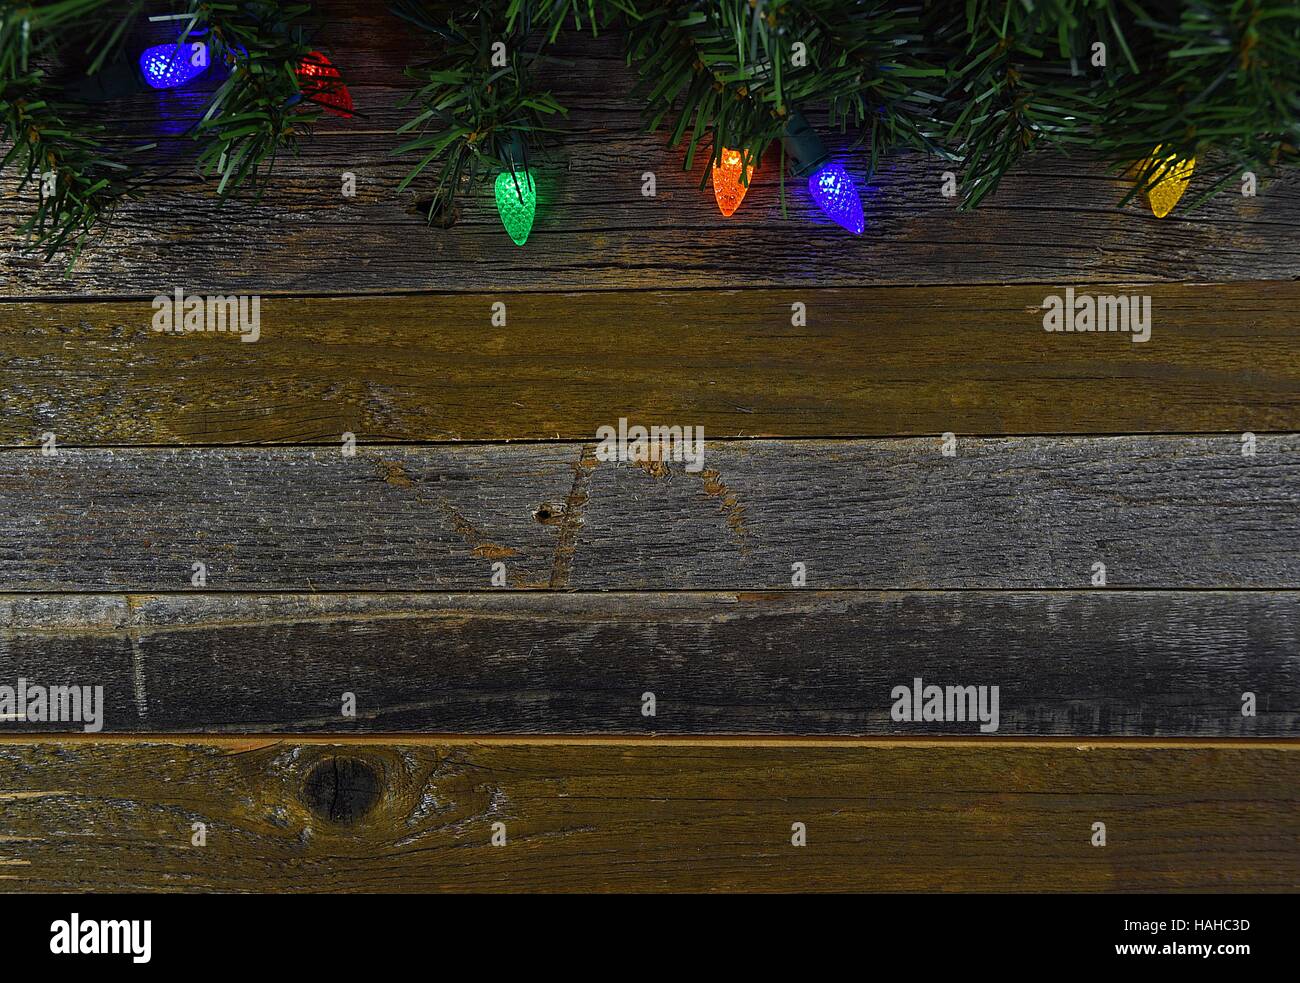 glowing Christmas lights and pine border on rustic barn wood Stock Photo